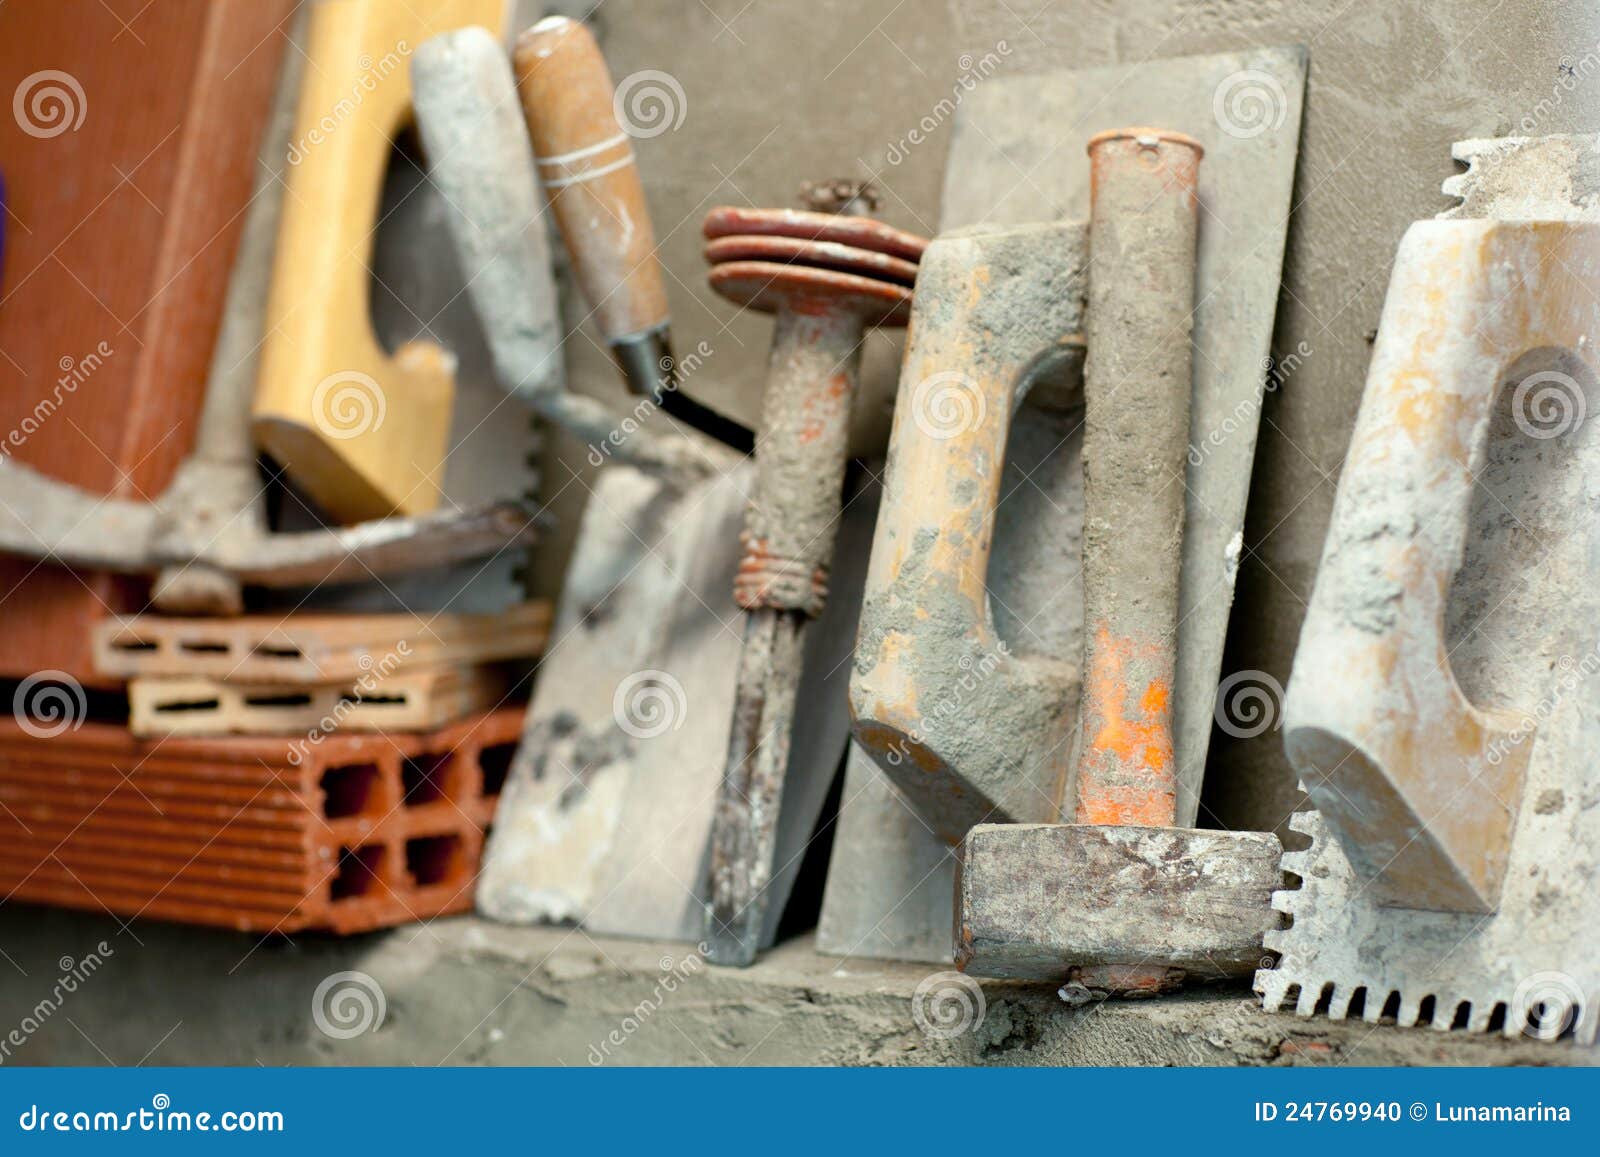 Construction Mason Cement Mortar Tools Stock Photo - Image: 24769940